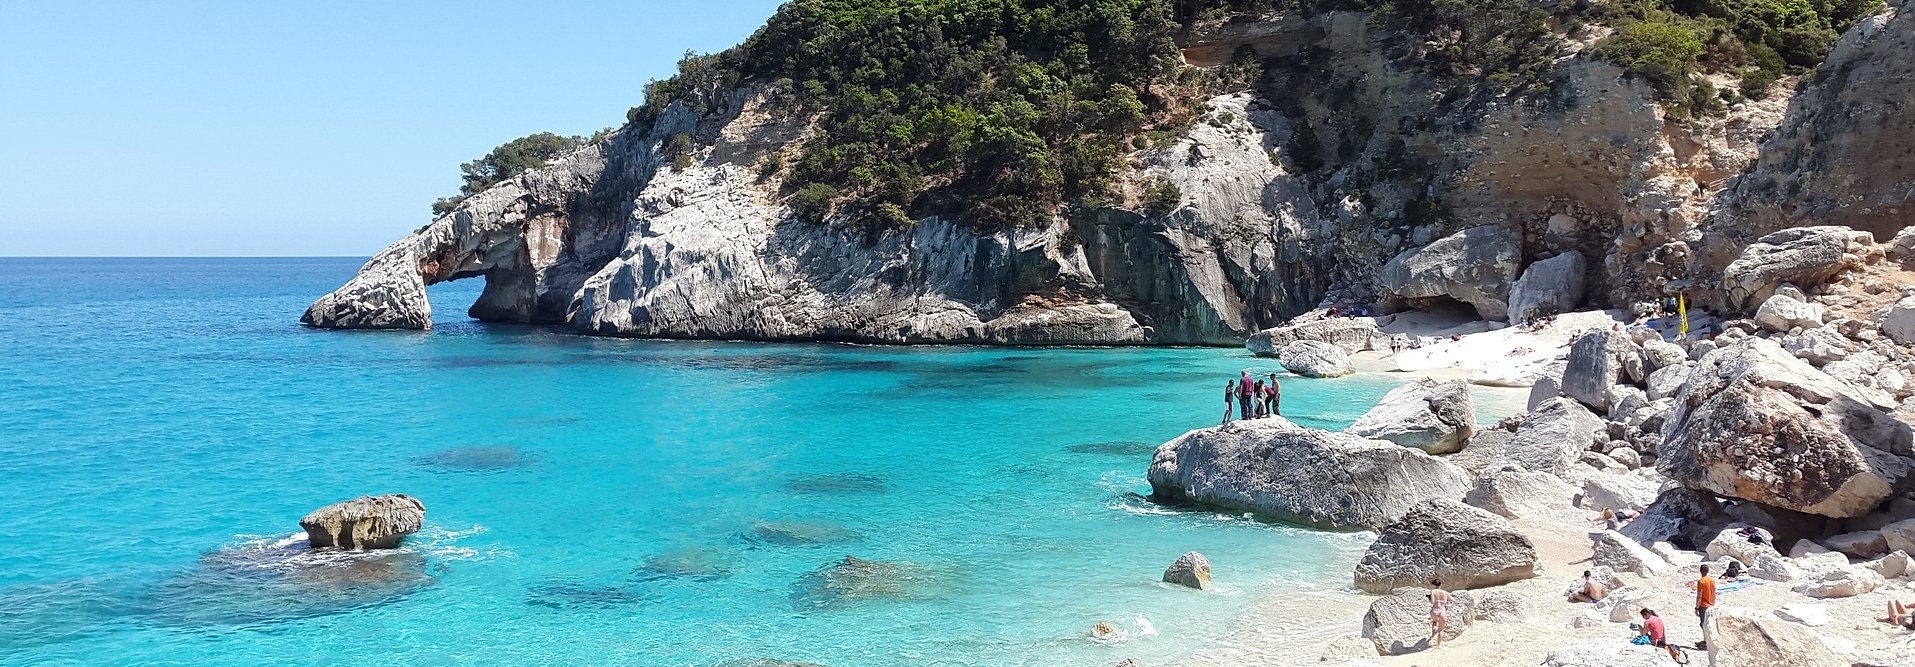 Sardinia REPORT|サルデーニャ島 視察ブログ